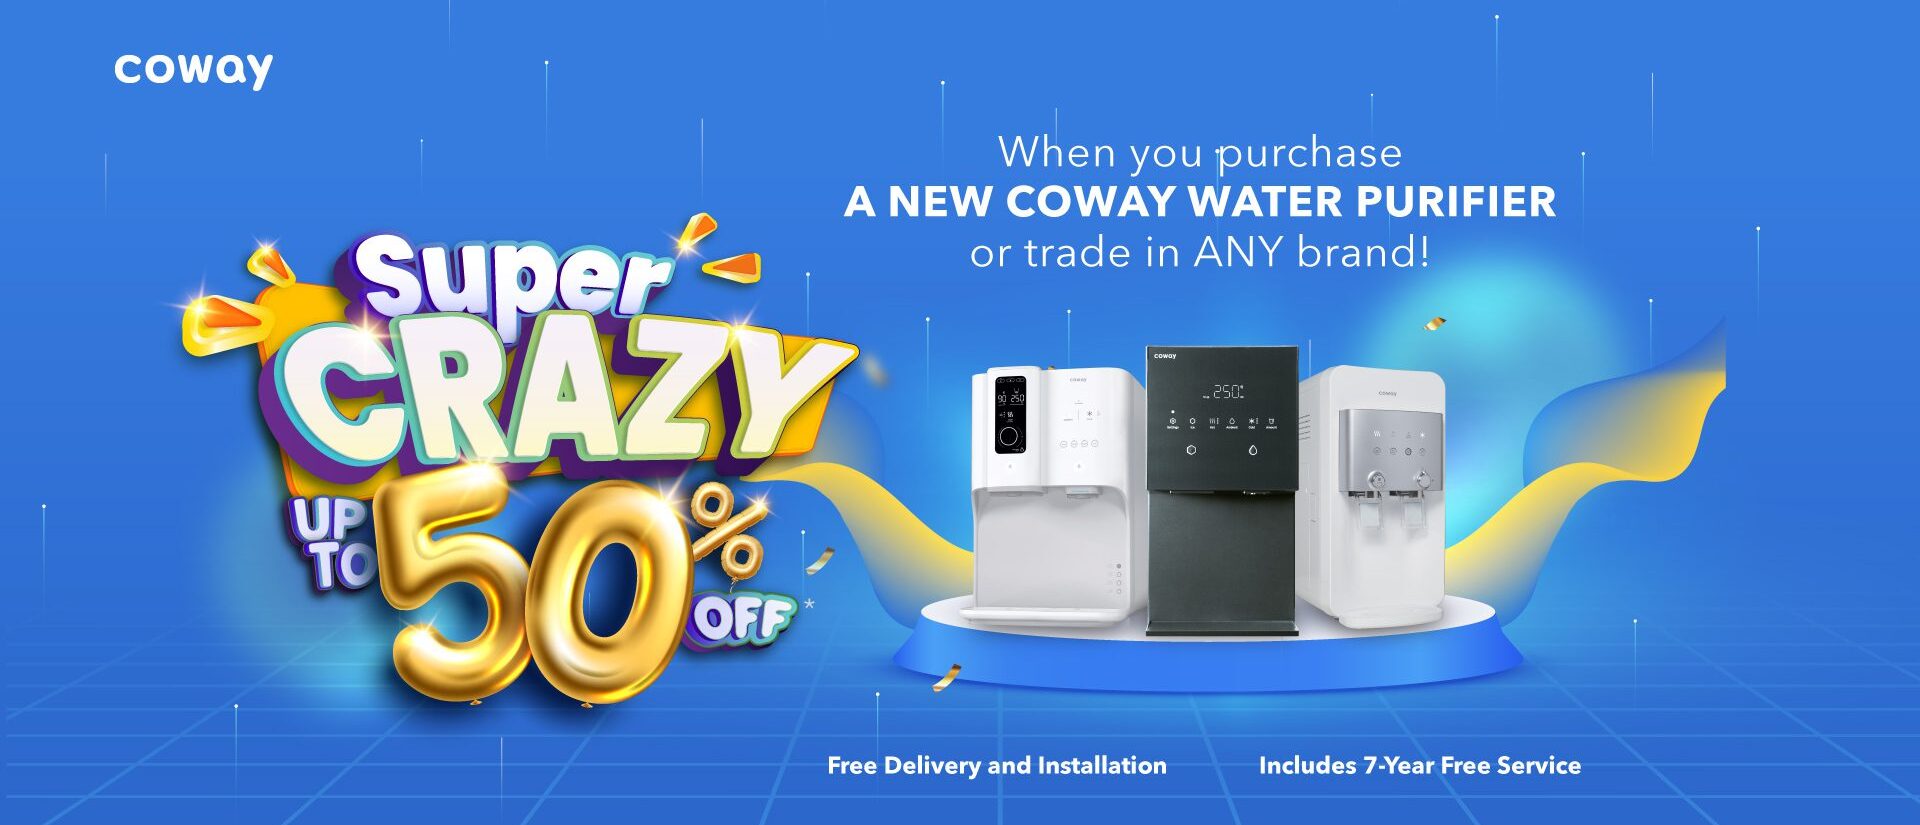 Coway Super Crazy 50% Rebate